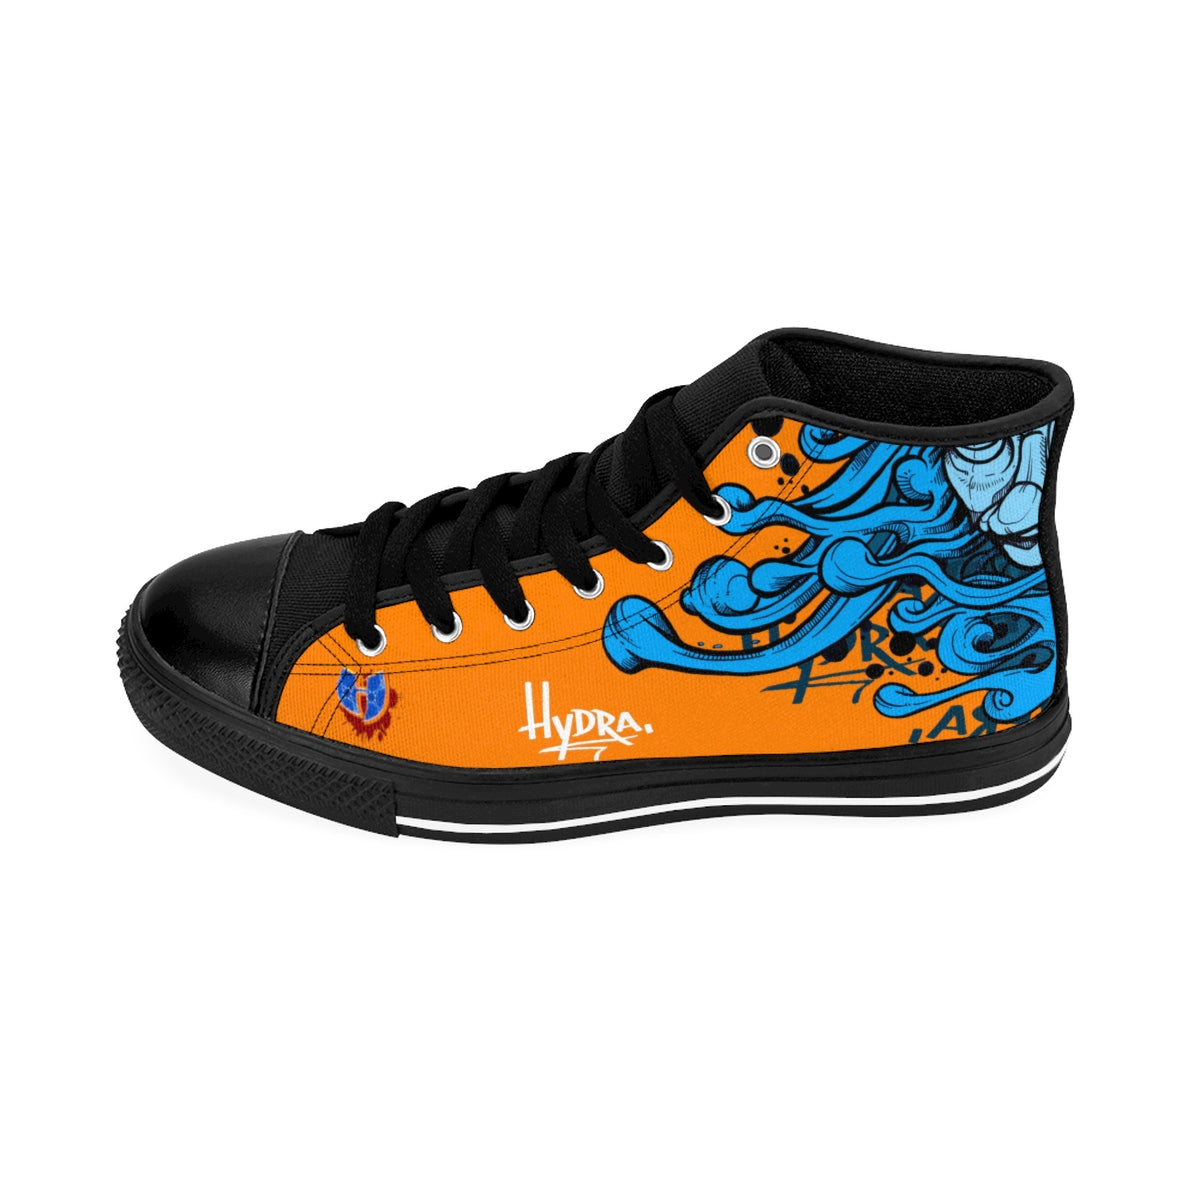 HRMI Orange Hydra Limited Edition Men's High-top Sneakers HellRazah Music Inc. - HeavenRazah